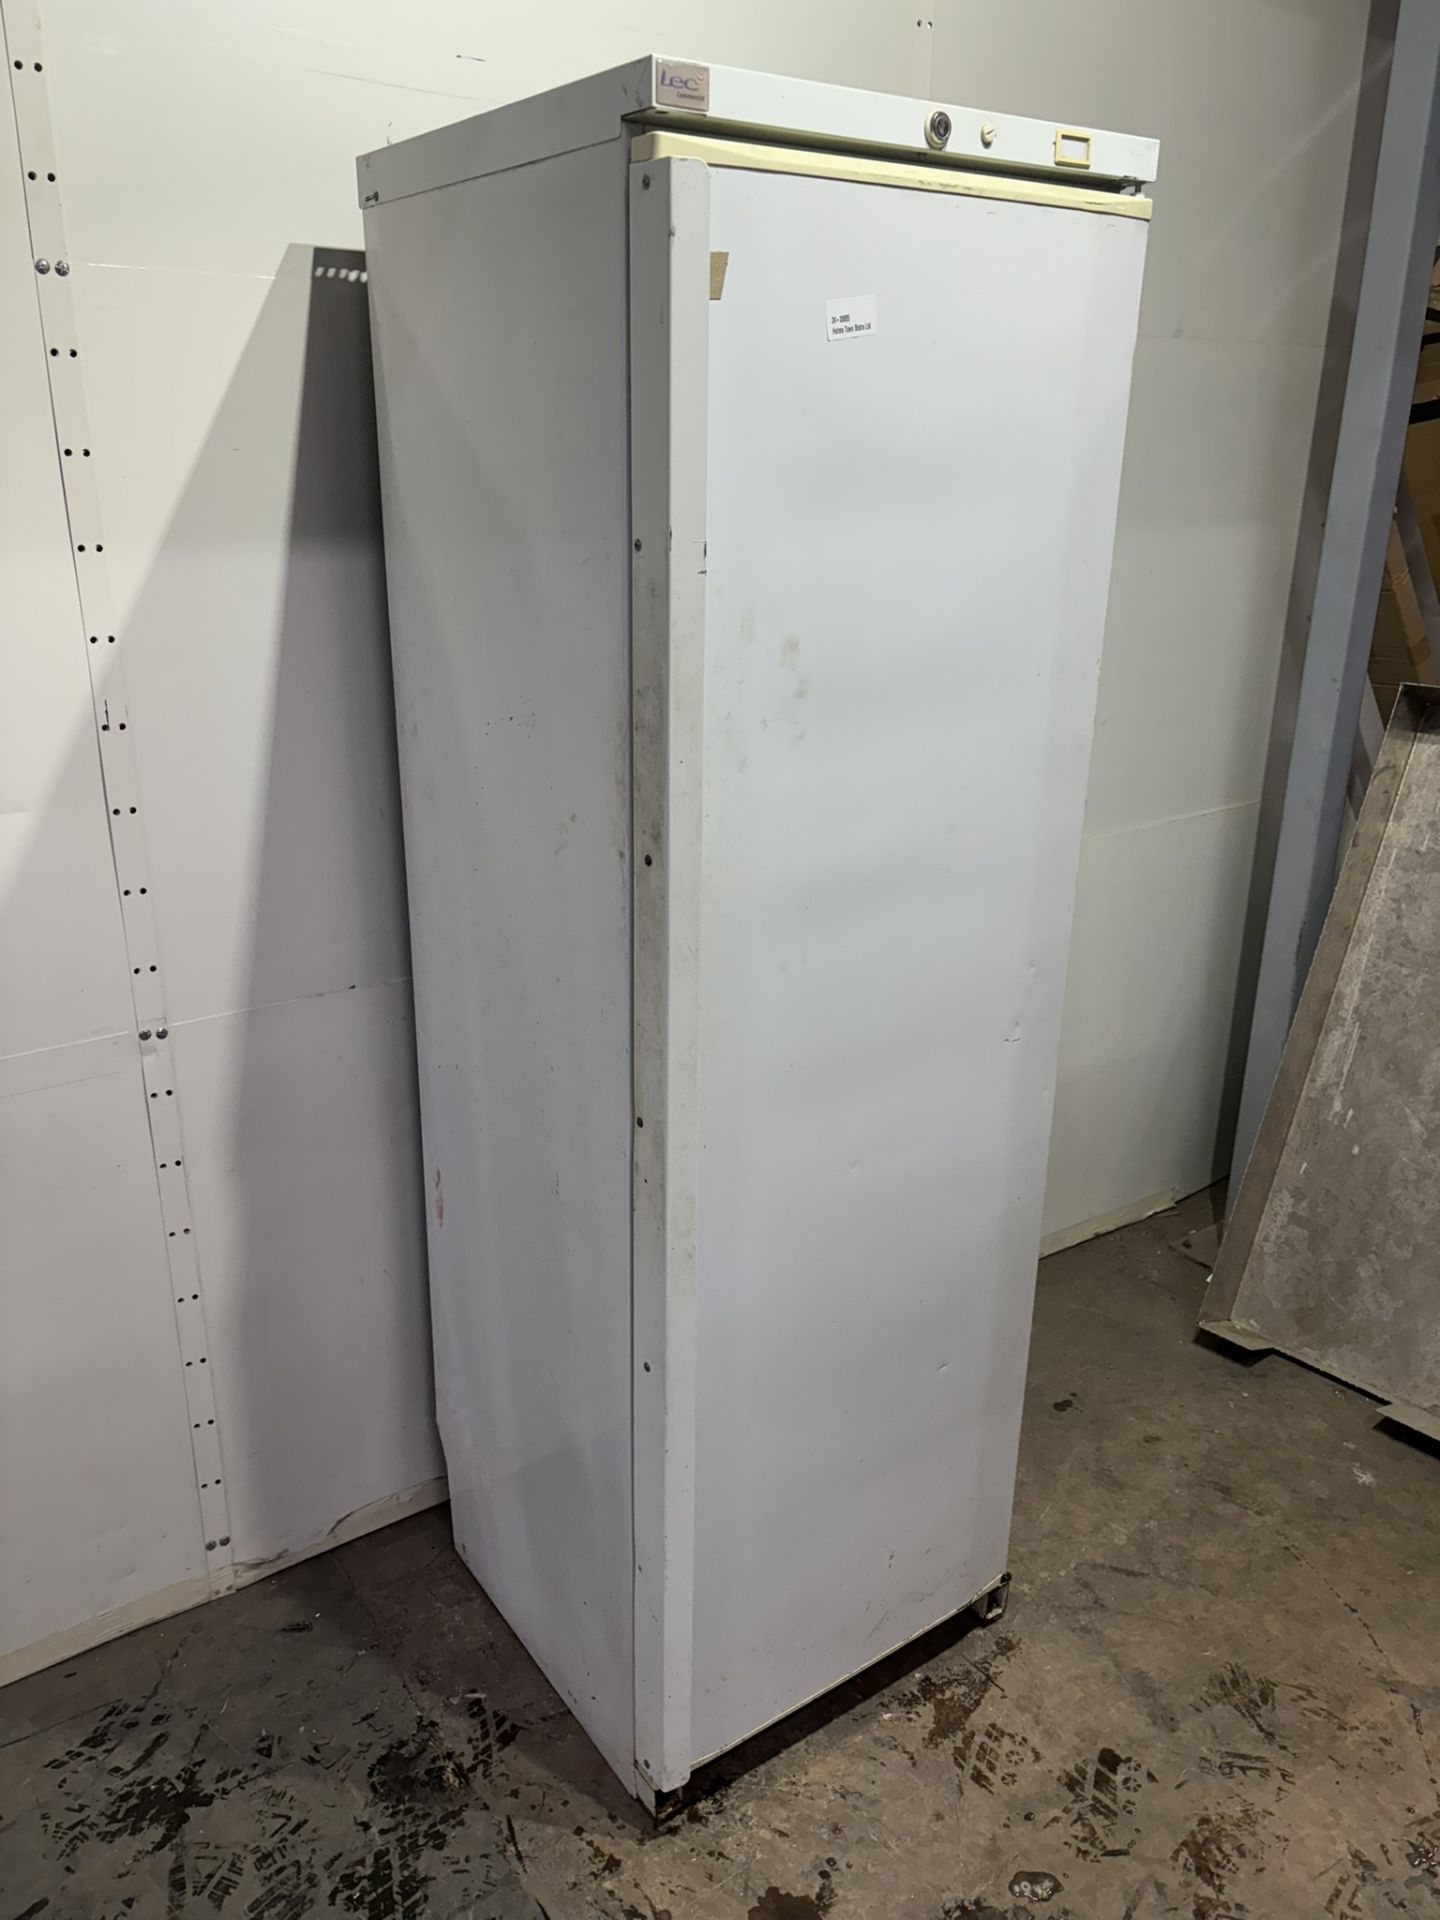 Lec Commercial pentane cl350 Fridge Freezer - White